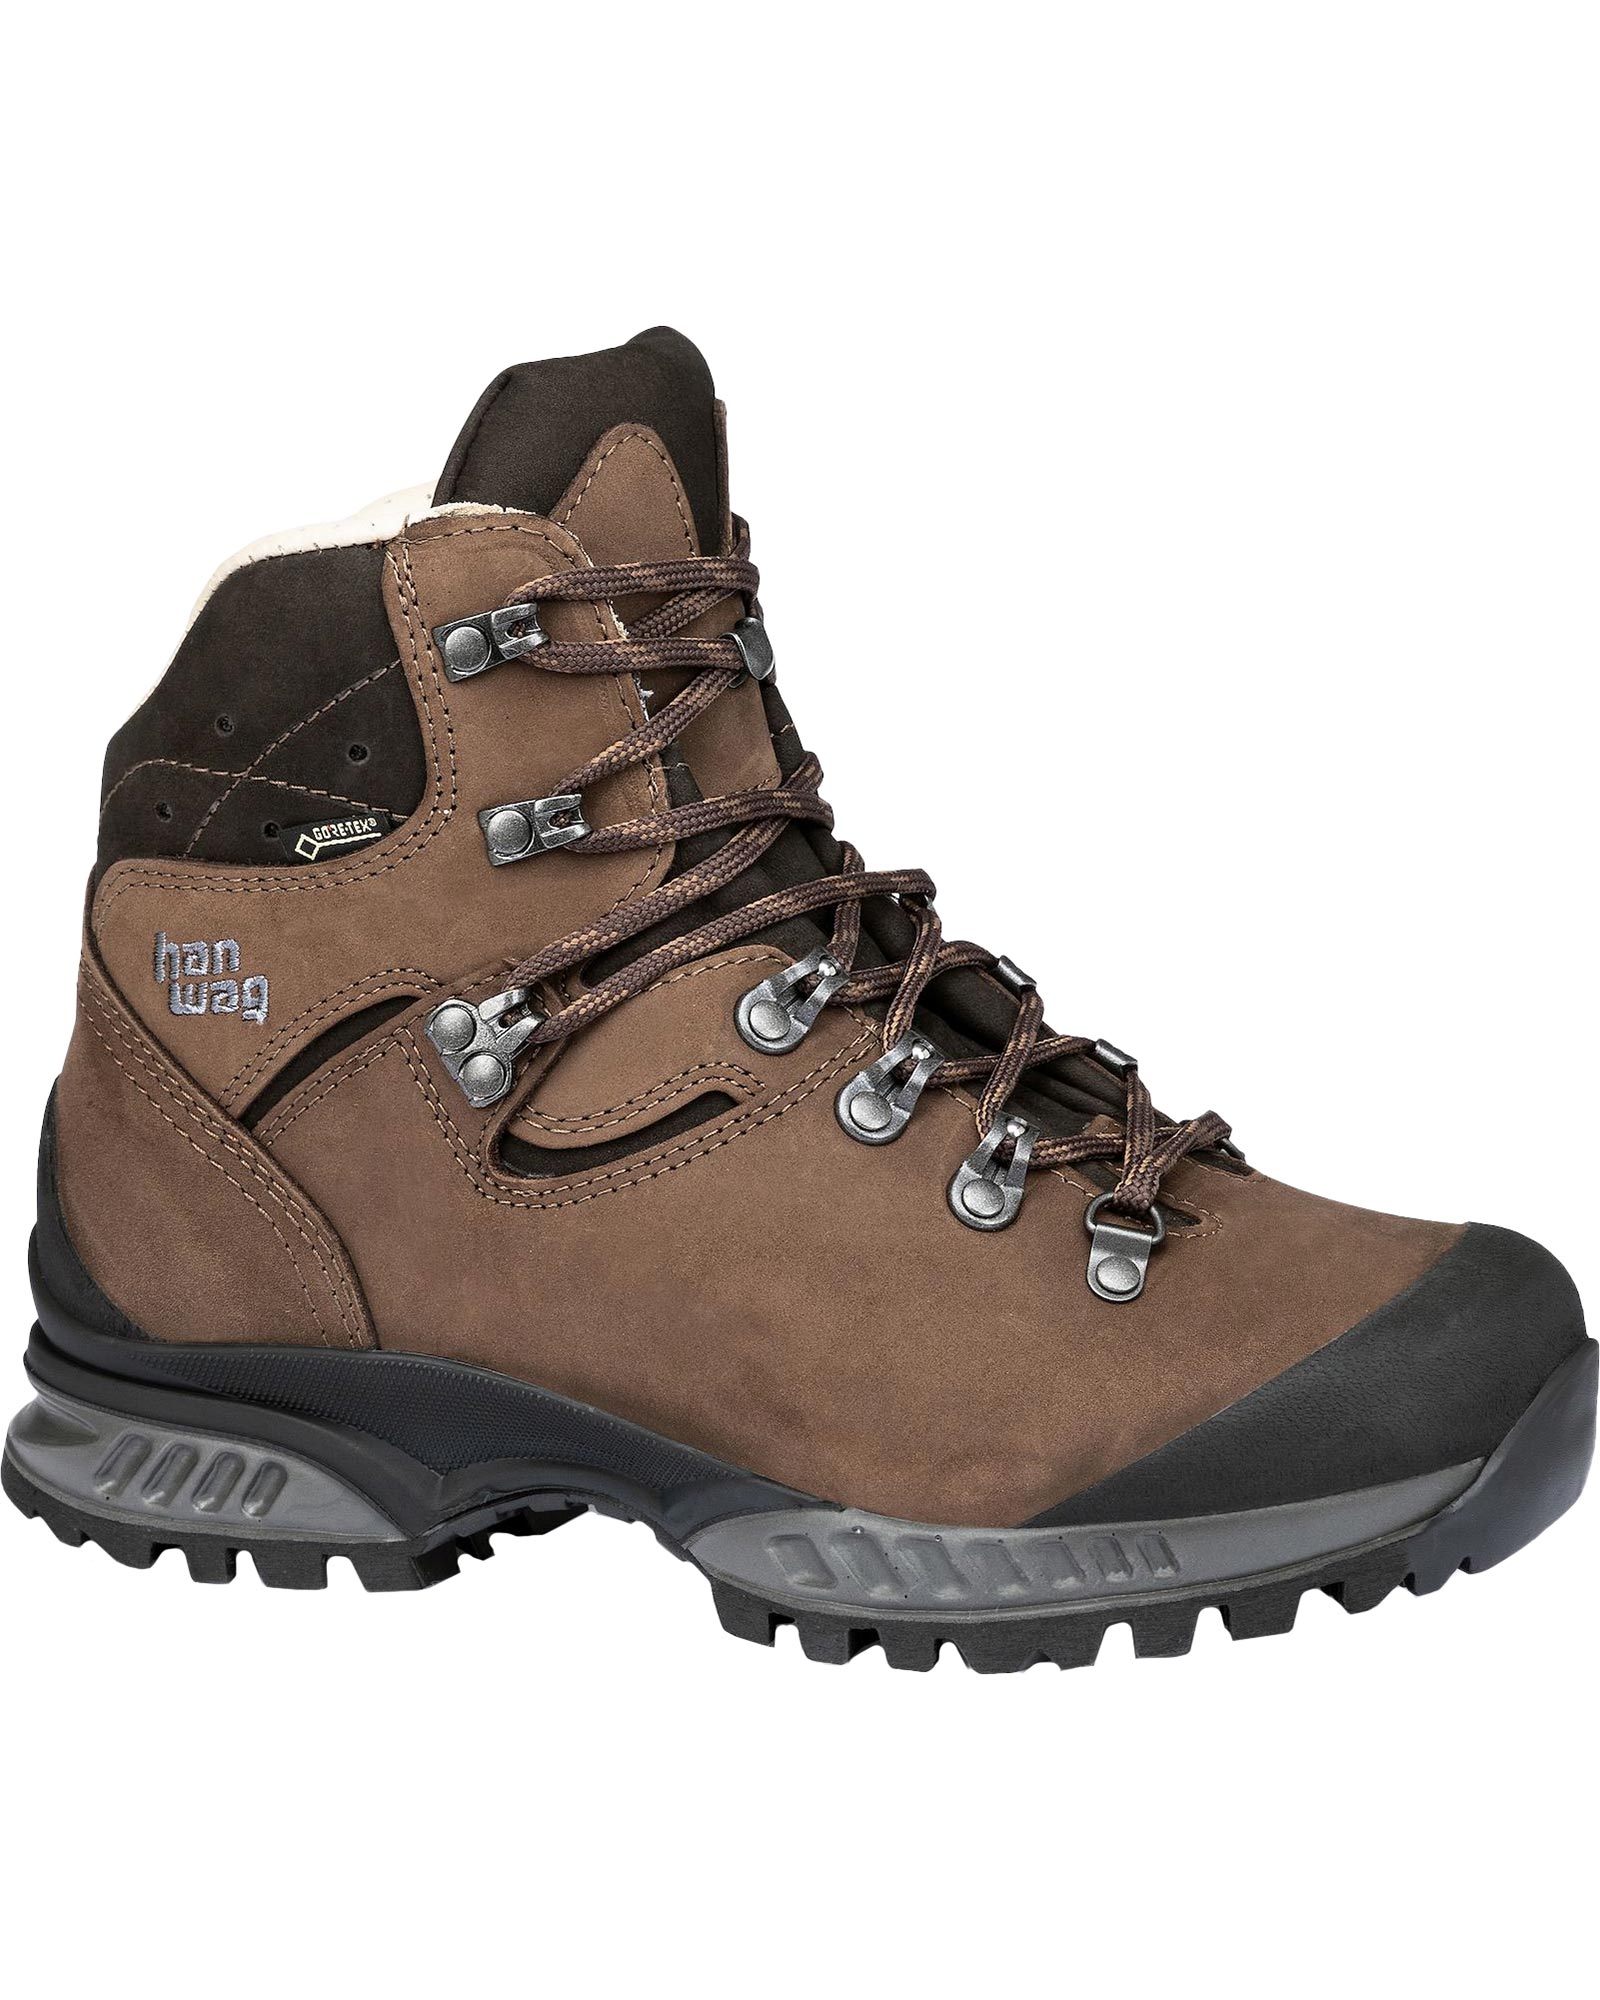 Hanwag Women's Tatra II GORE-TEX Walking Boots | Ellis Brigham Mountain  Sports